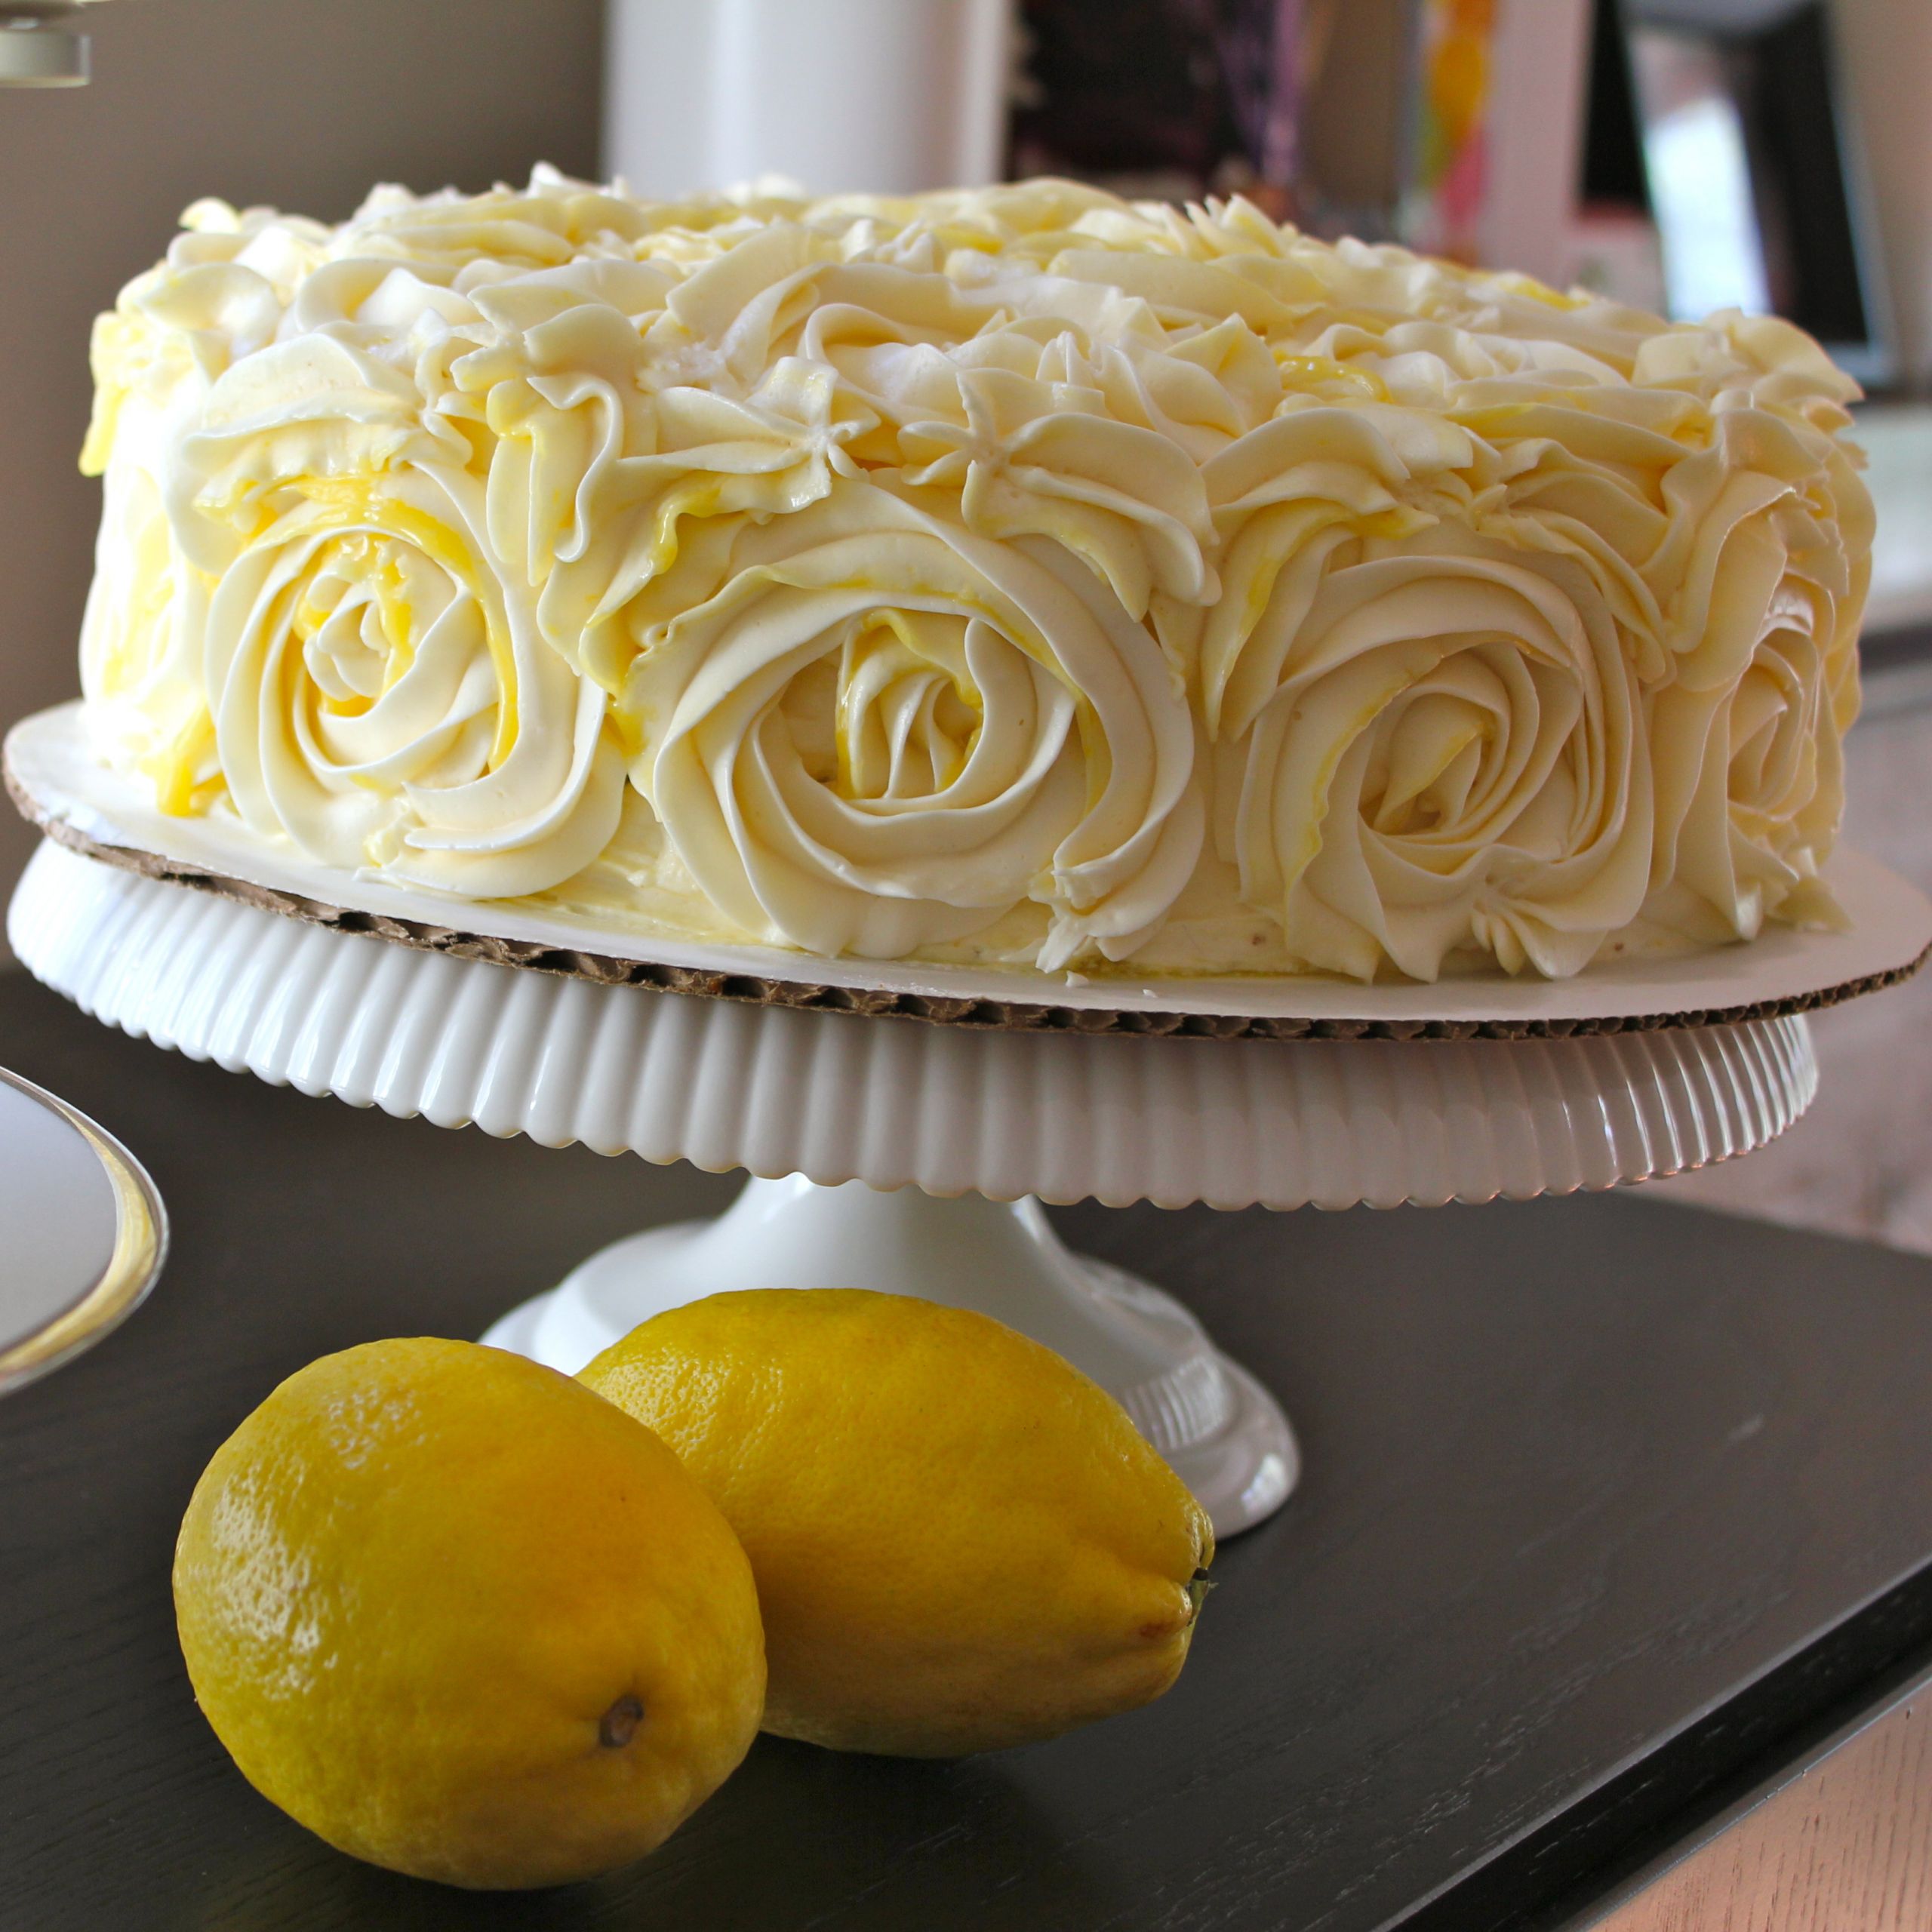 Lemon Birthday Cake Recipes
 The Best Lemon Birthday Cake Home Inspiration and DIY